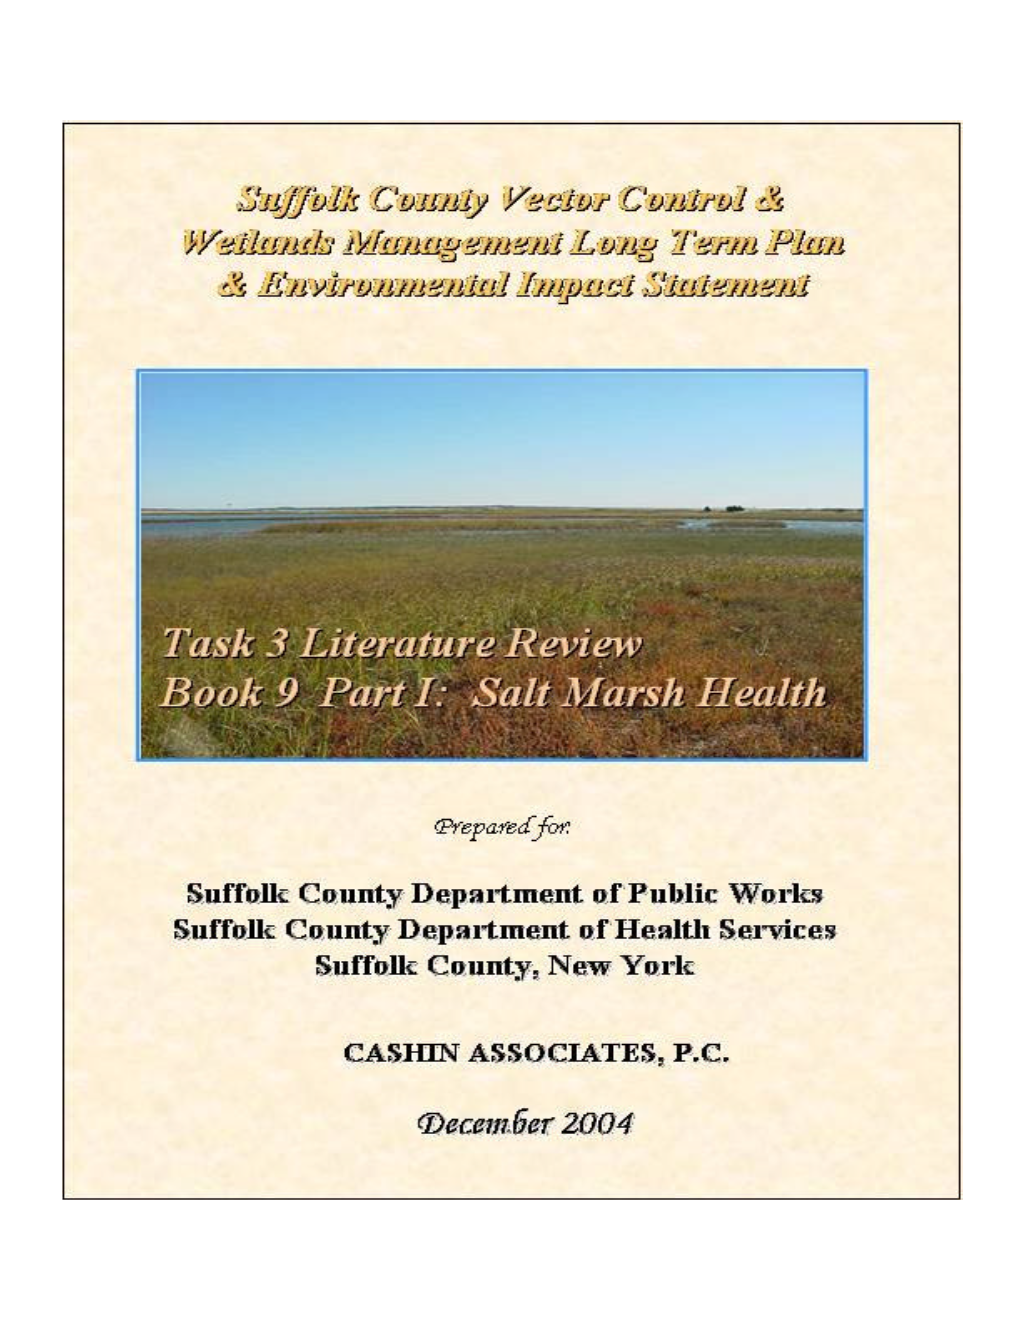 Book 9 Part 1 Salt Marsh Health